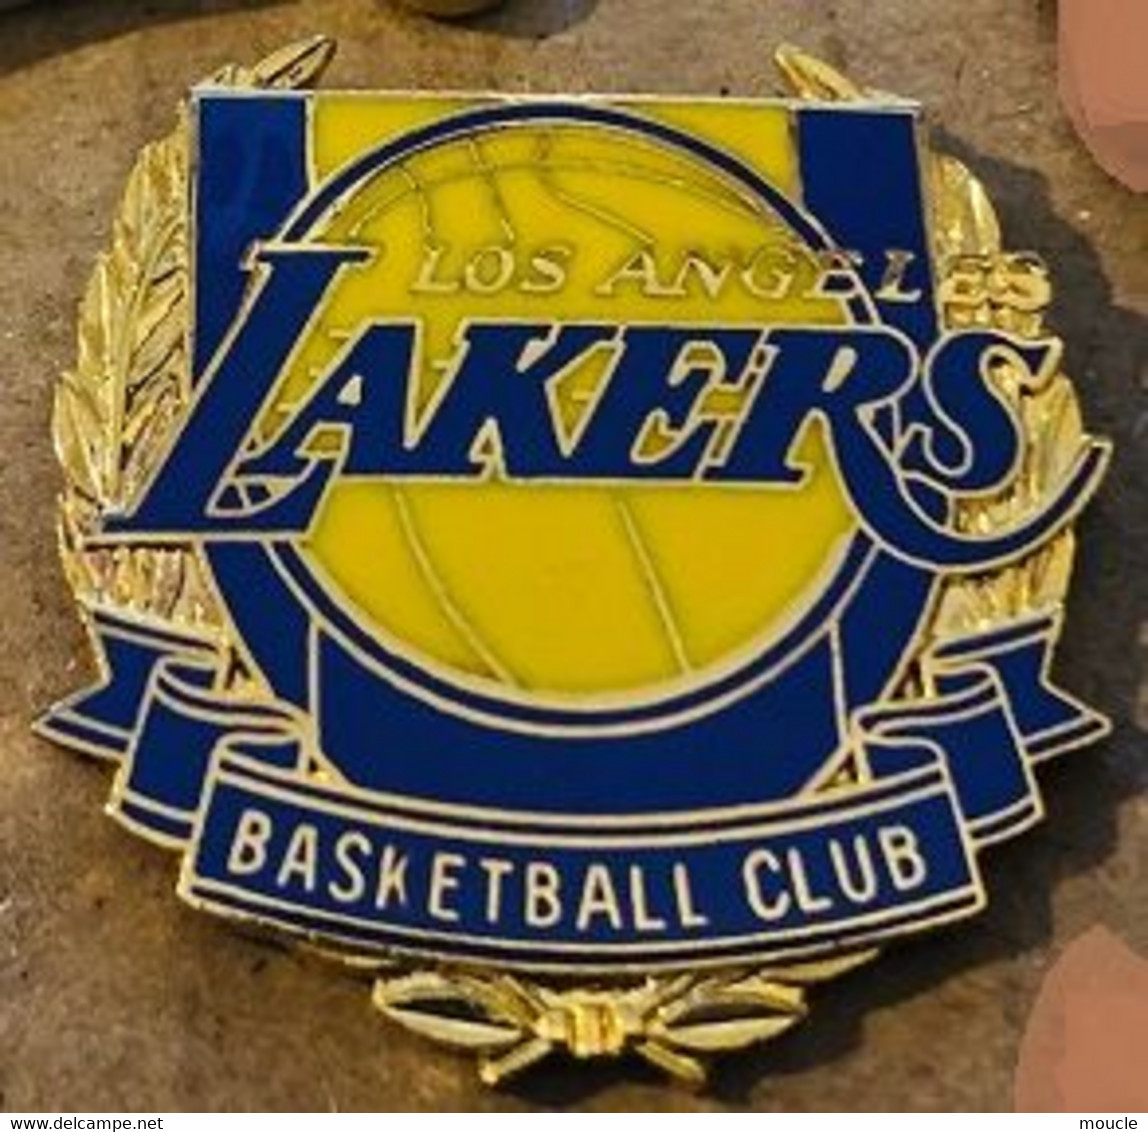 LOS ANGELES LAKERS - BASKEBALL CLUB - USA - ETATS UNIS D'AMERIQUE - NBA - UNITED STATES - LAURIERS - BALLON -    (14) - Basketbal